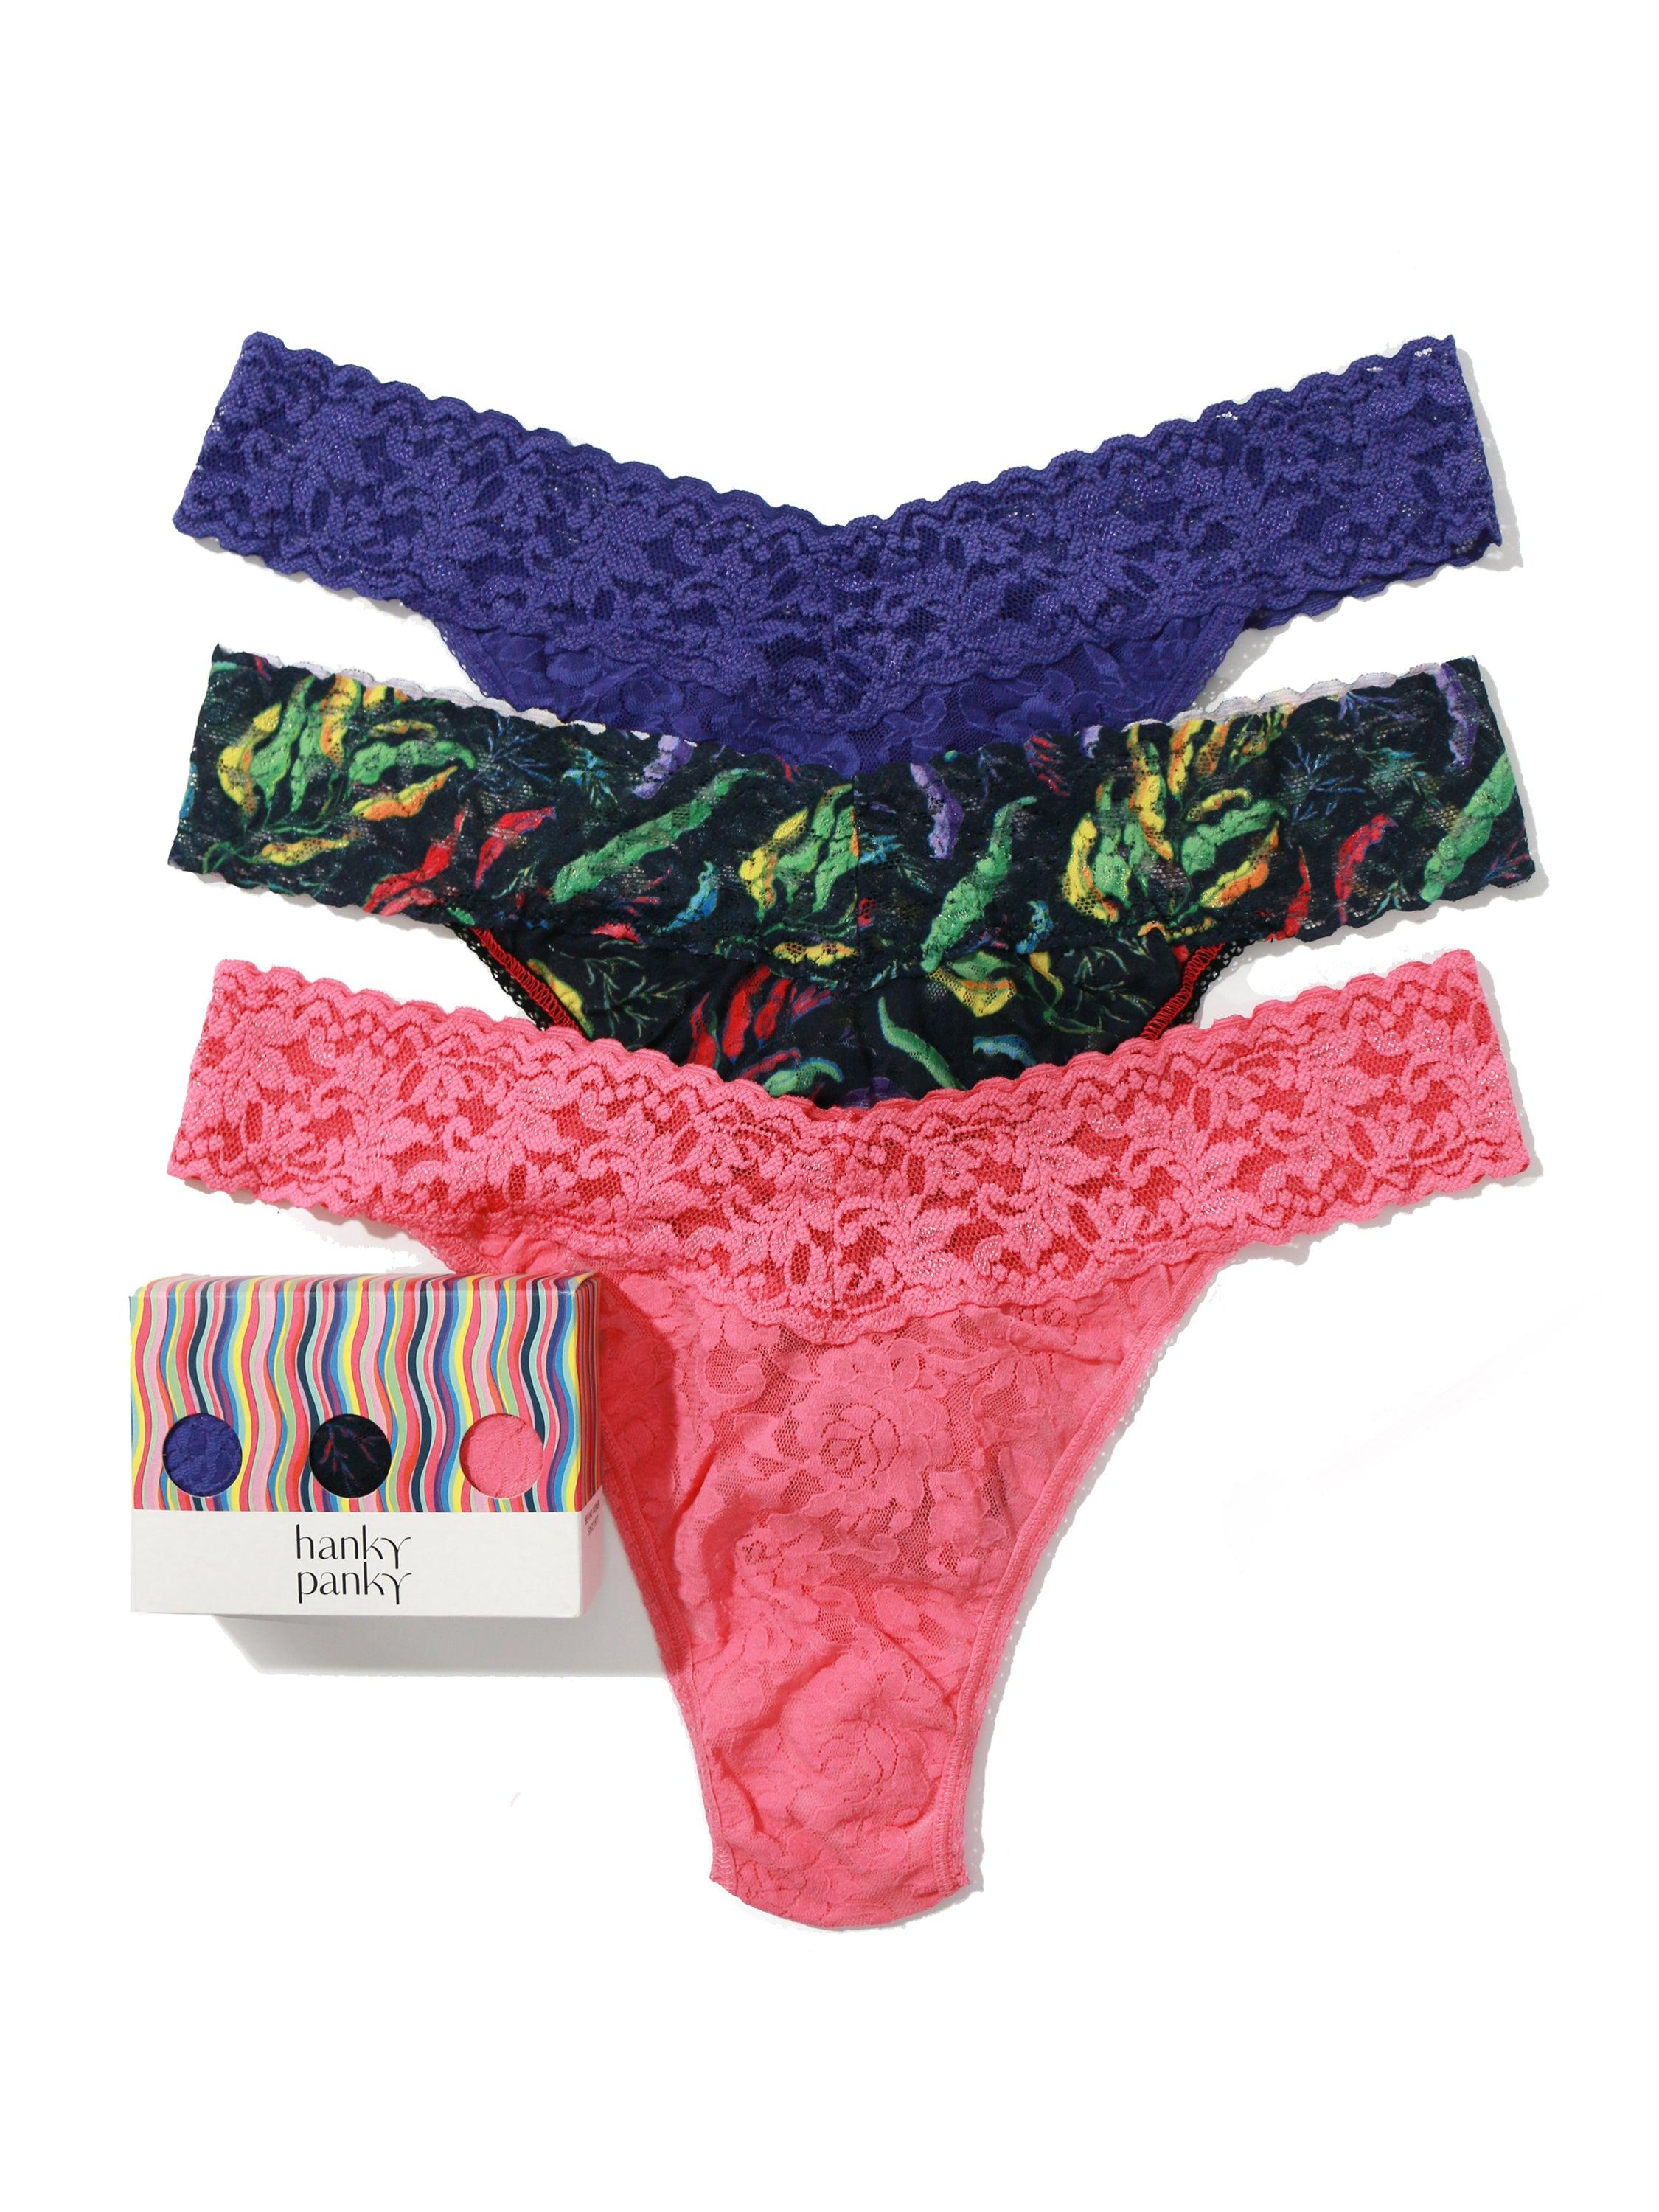 Multi-Packs Lingerie | Sets of Thongs, Panties and More | Hanky Panky